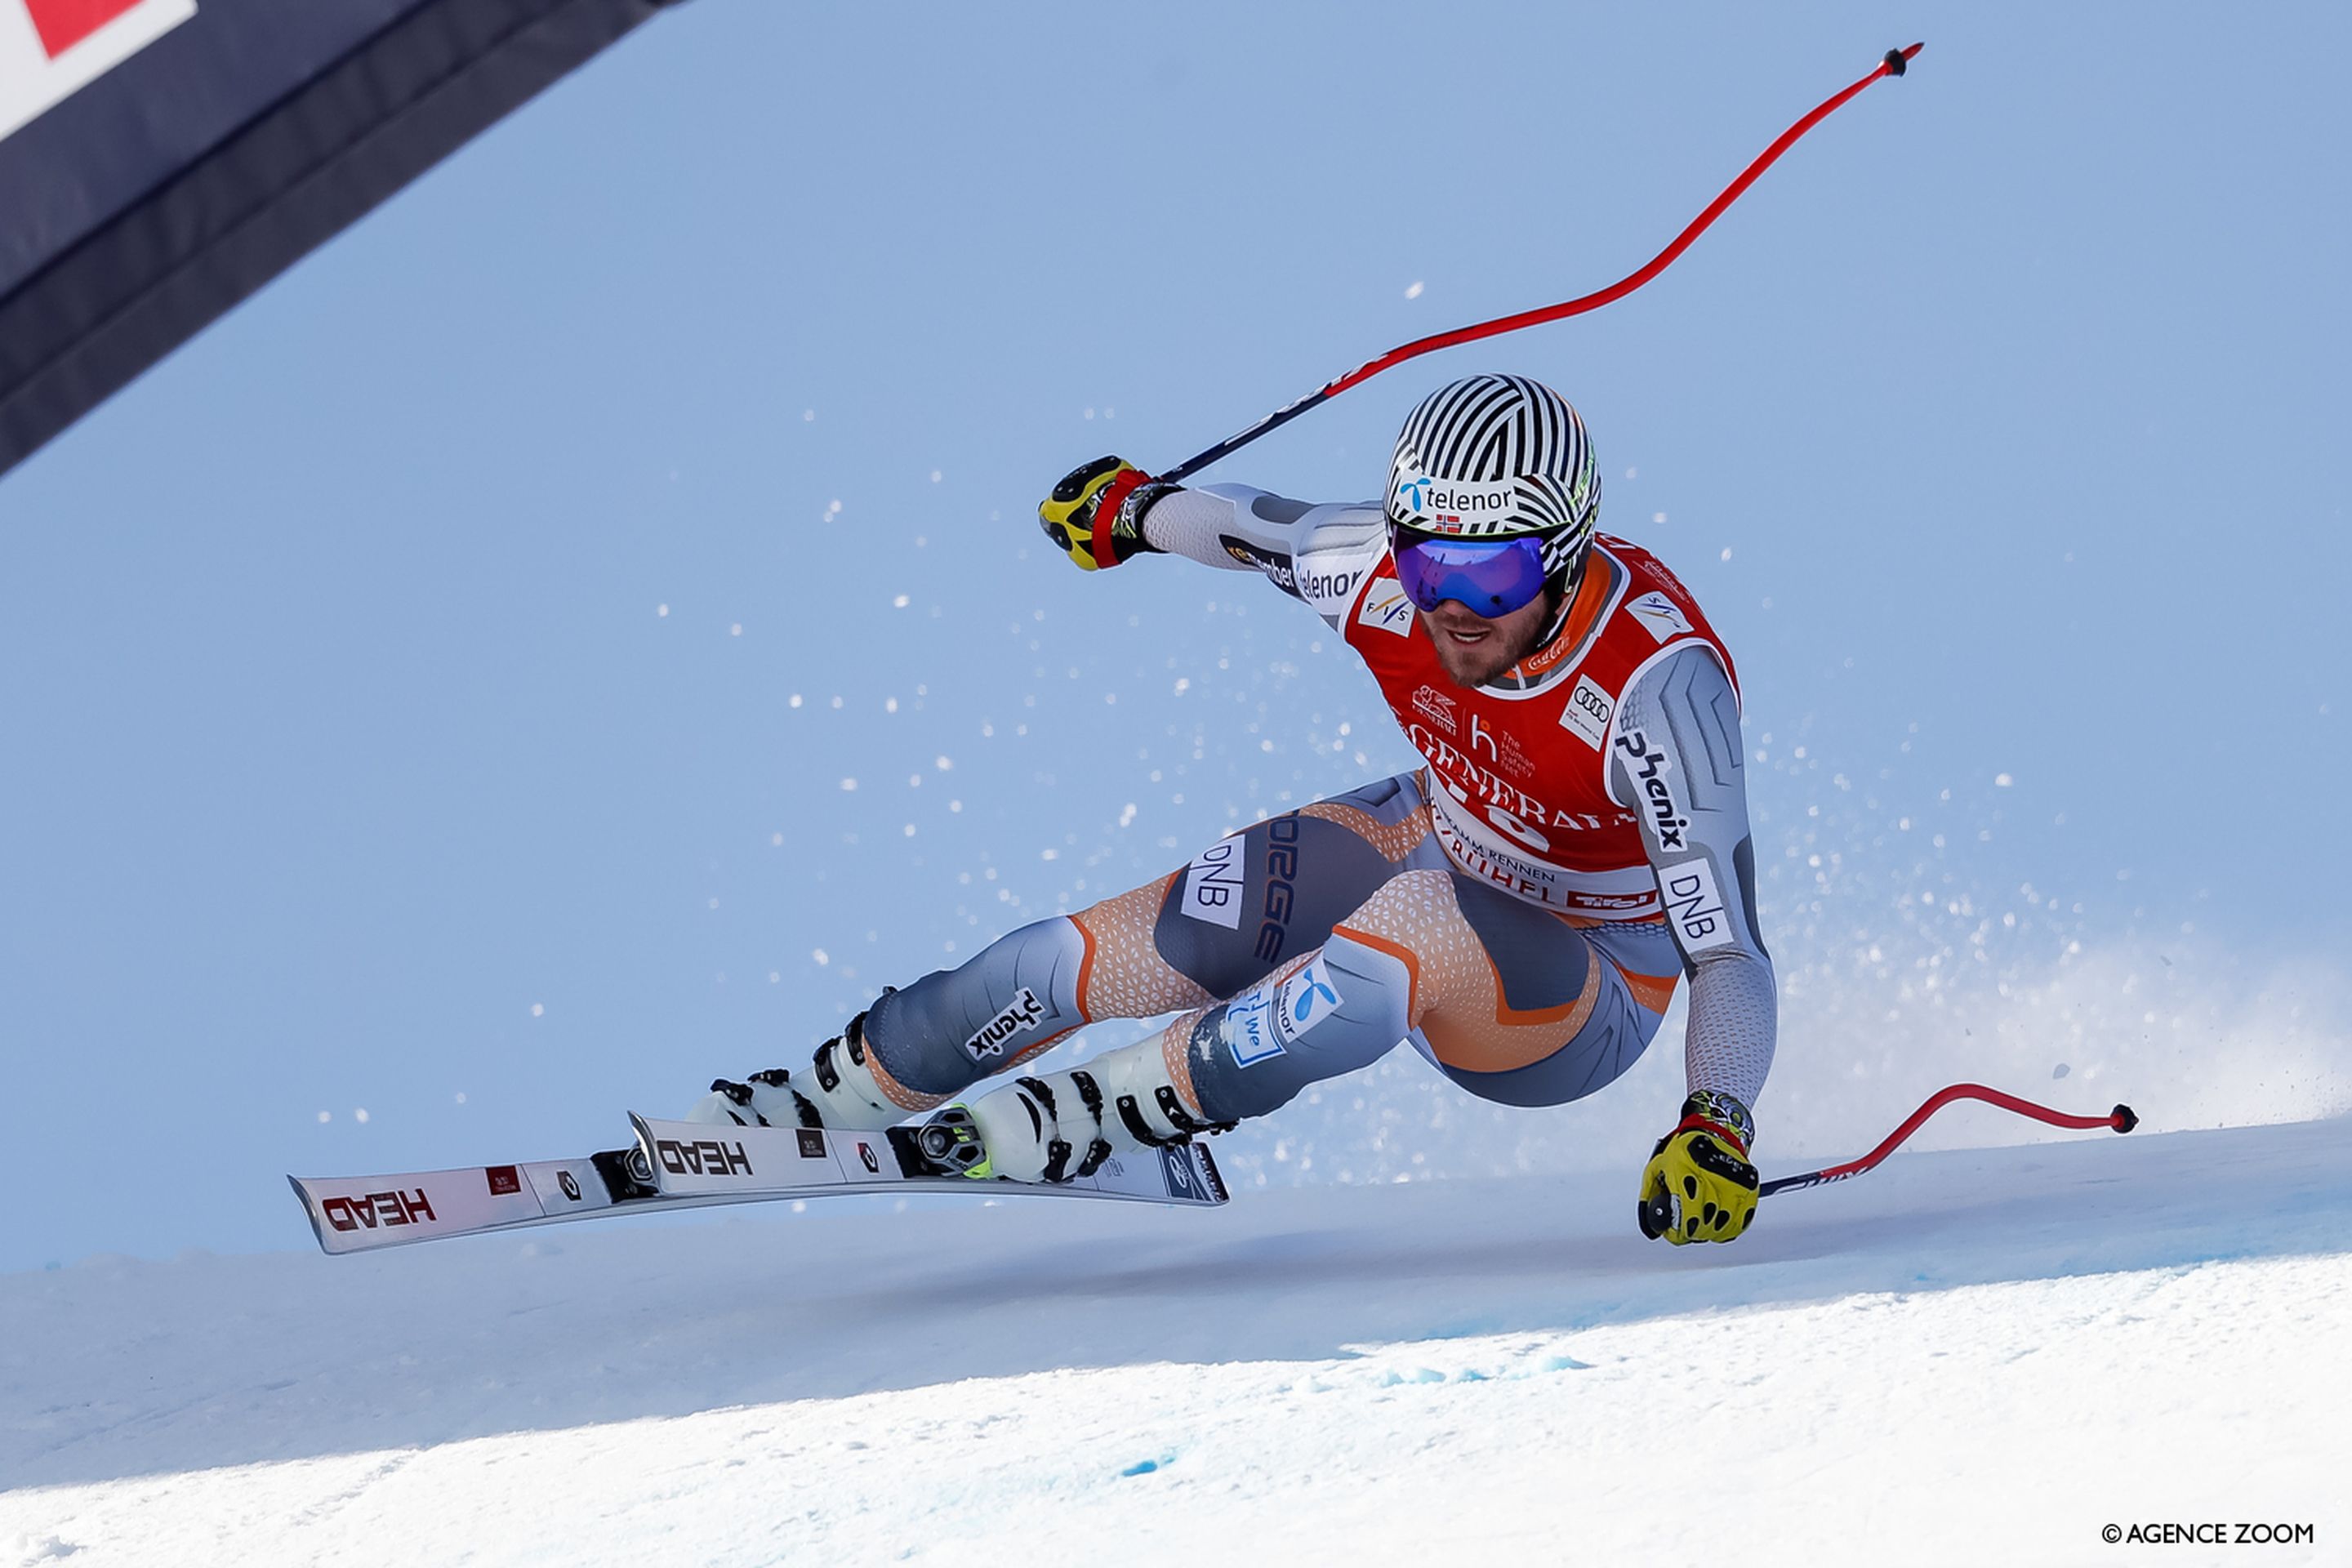 KITZBUEHEL, AUSTRIA - JANUARY 24 : Kjetil Jansrud of Norway competes during the Audi FIS Alpine Ski World Cup Men's Super G on January 24, 2020 in Kitzbuehel Austria. (Photo by Alexis Boichard/Agence Zoom)